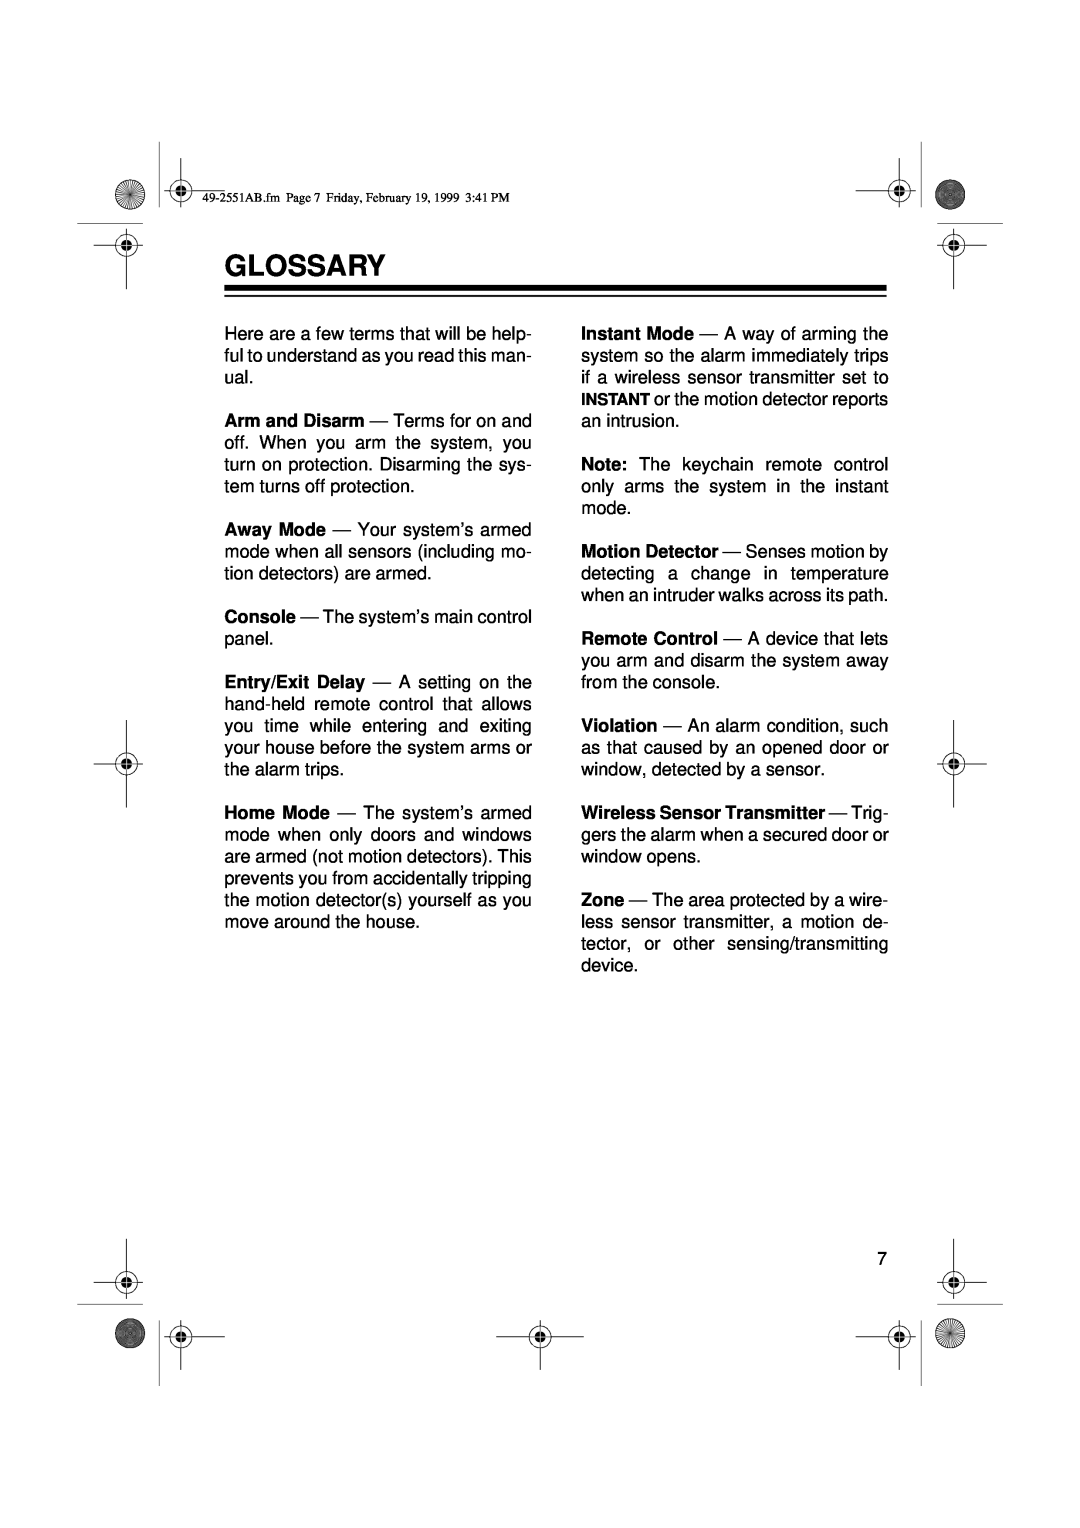 Radio Shack 49-2551A owner manual Glossary 